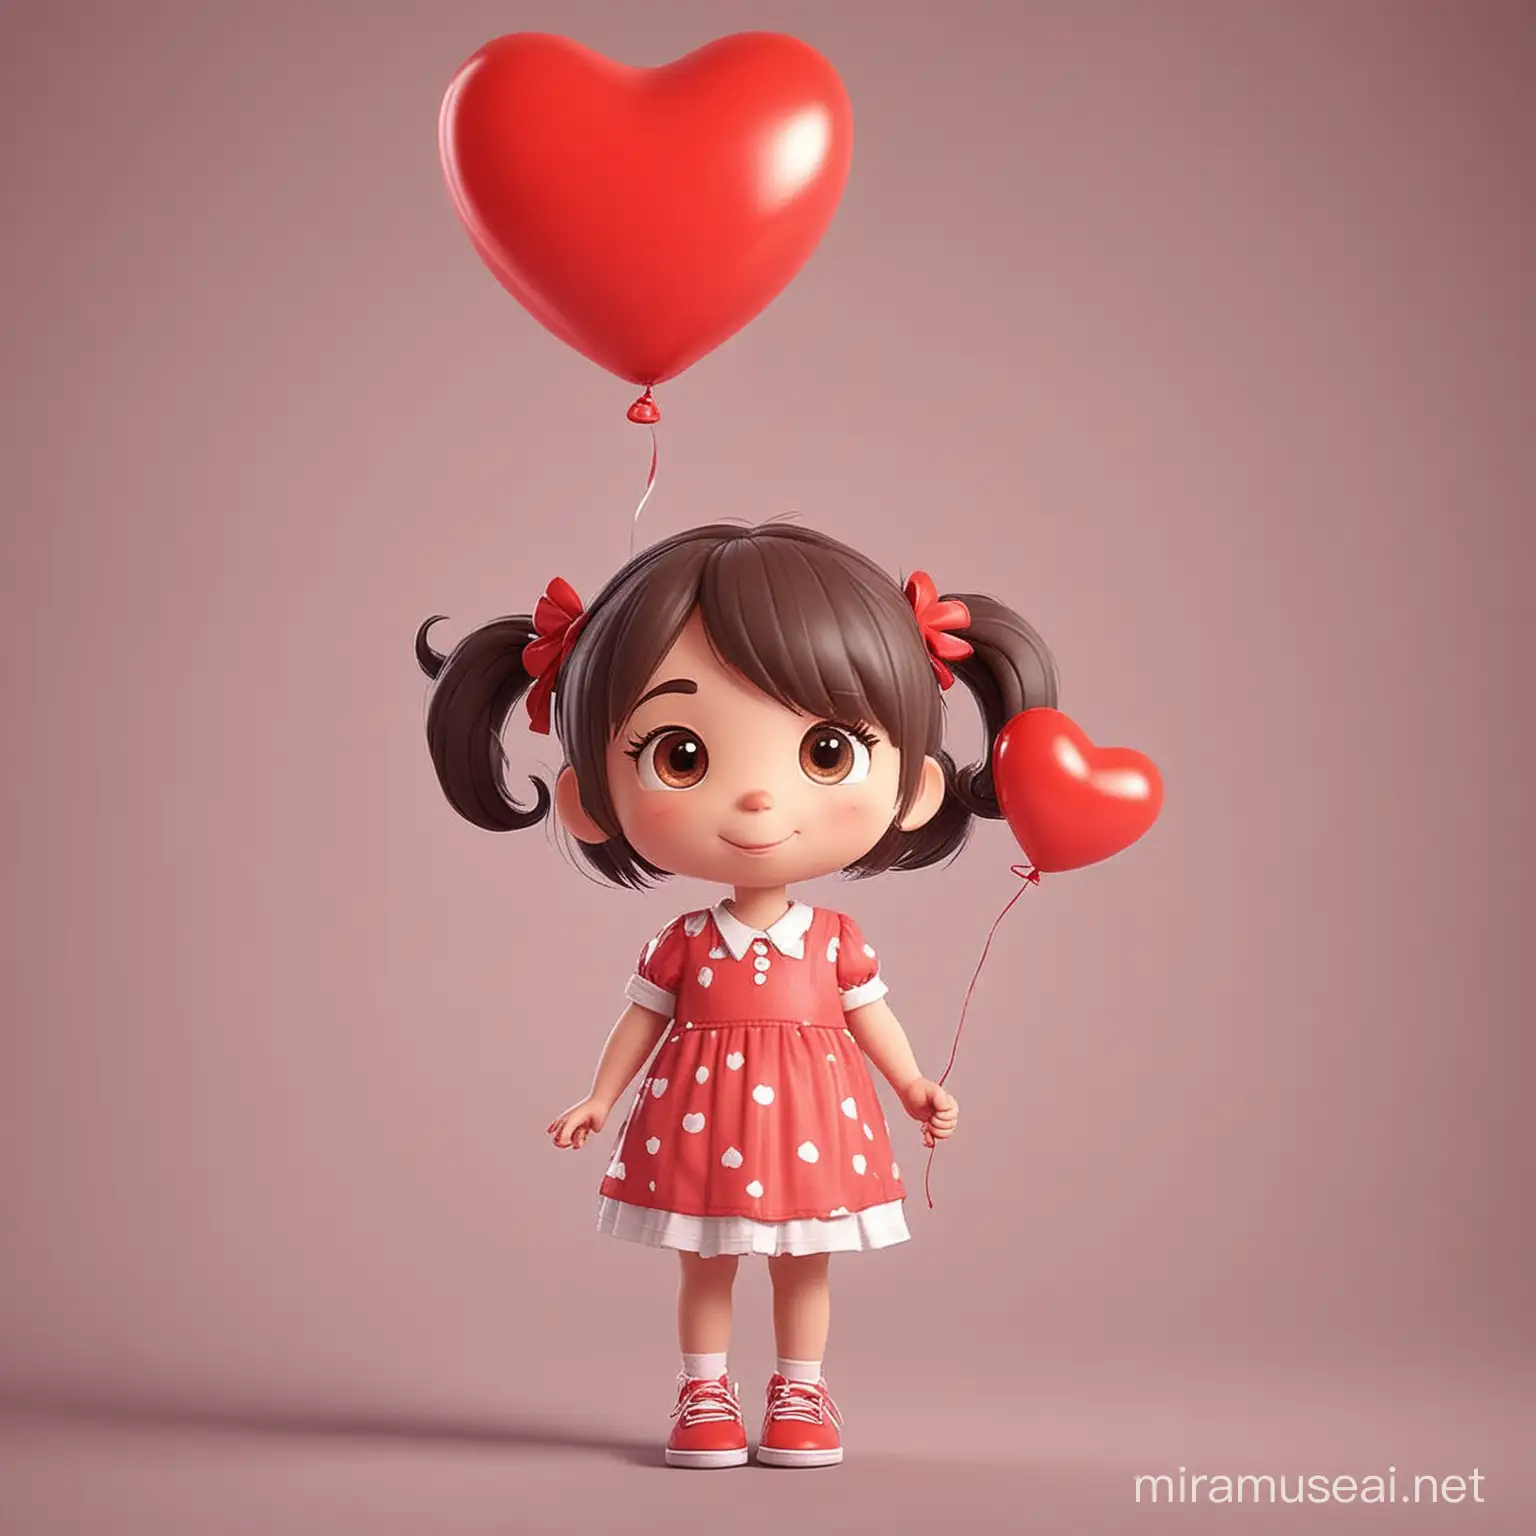 Animated Girl Child Holding Heart Balloon in Playful Scene